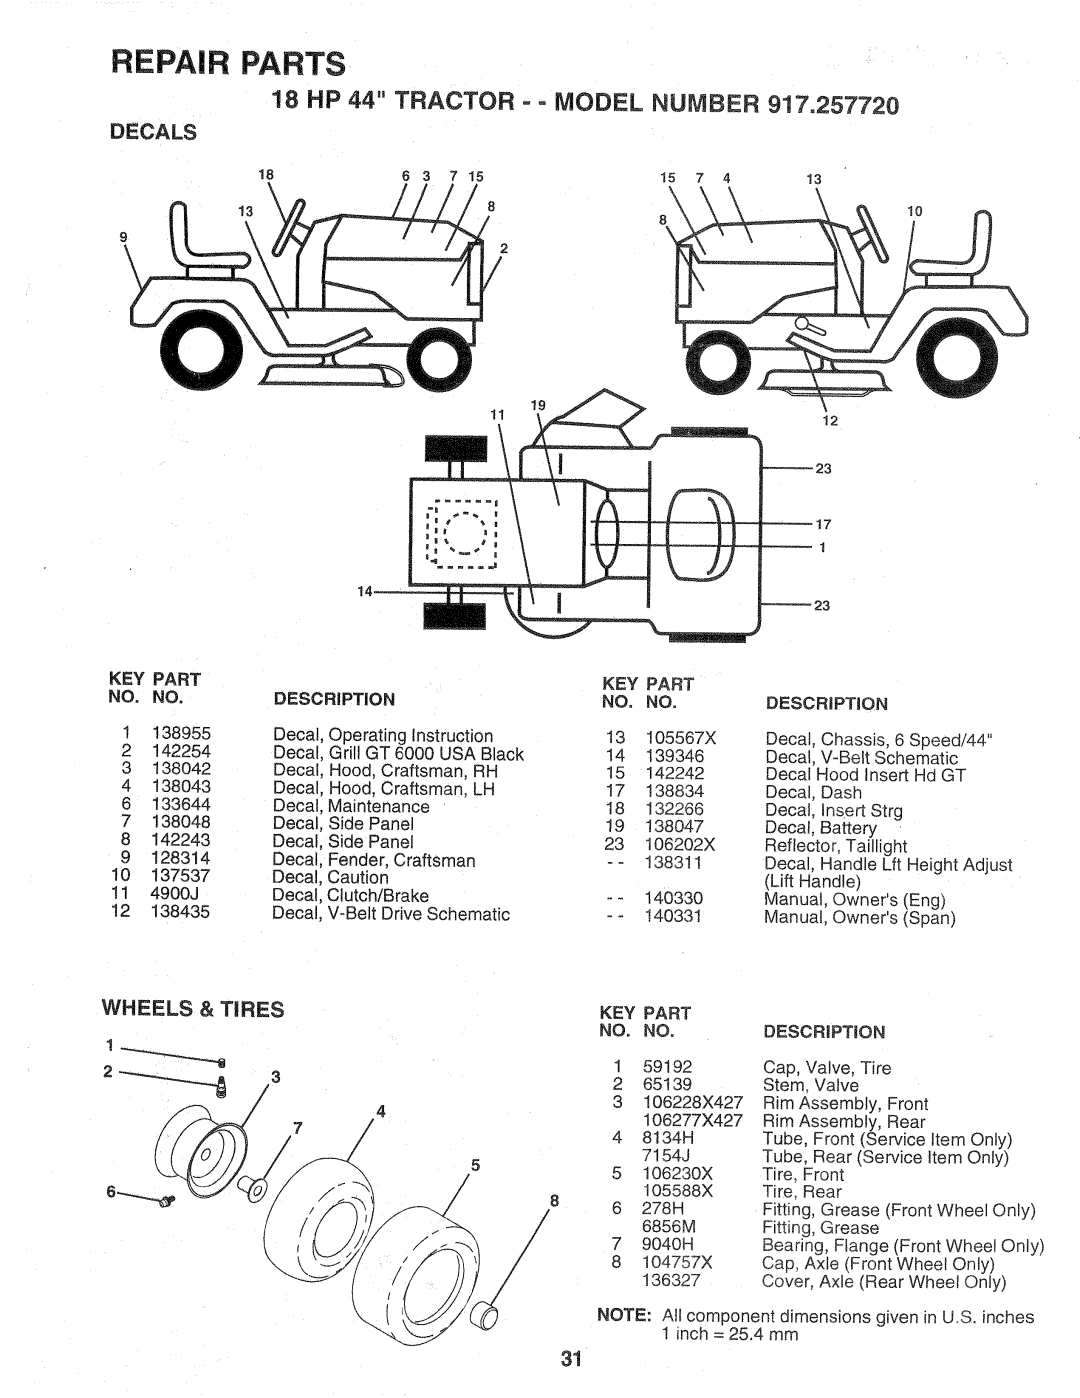 Sears 917.257720 owner manual Repair Parts, 18 HP 44 TRACTOR - - MODEL NUMBER, Decals, Wheels & Tires, Description 